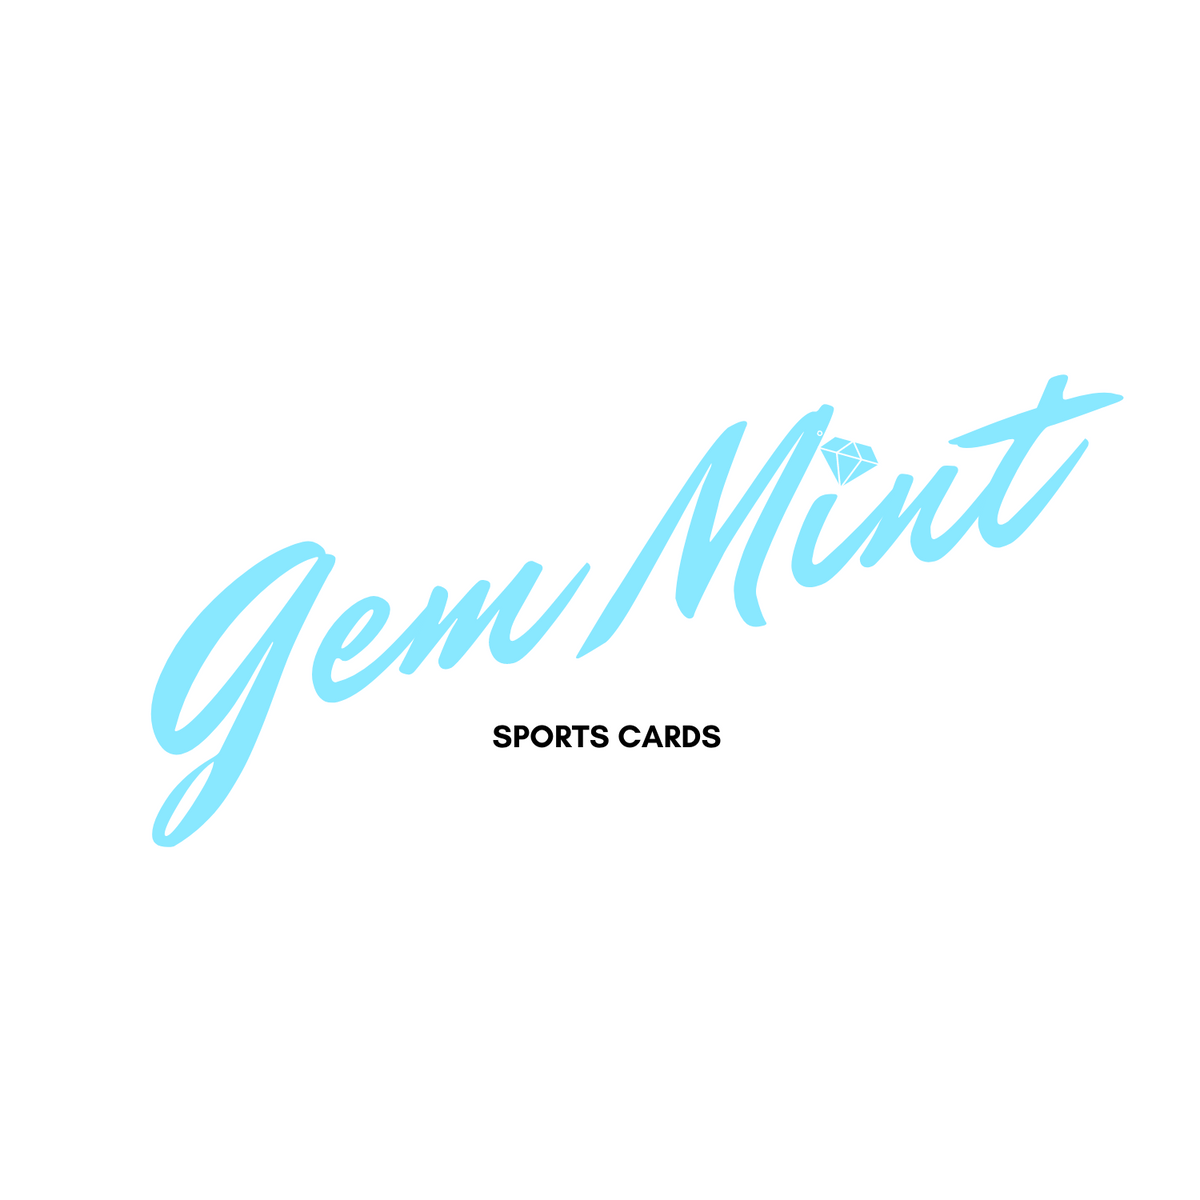 Grading Magnifying Lens – Gem Mint Club